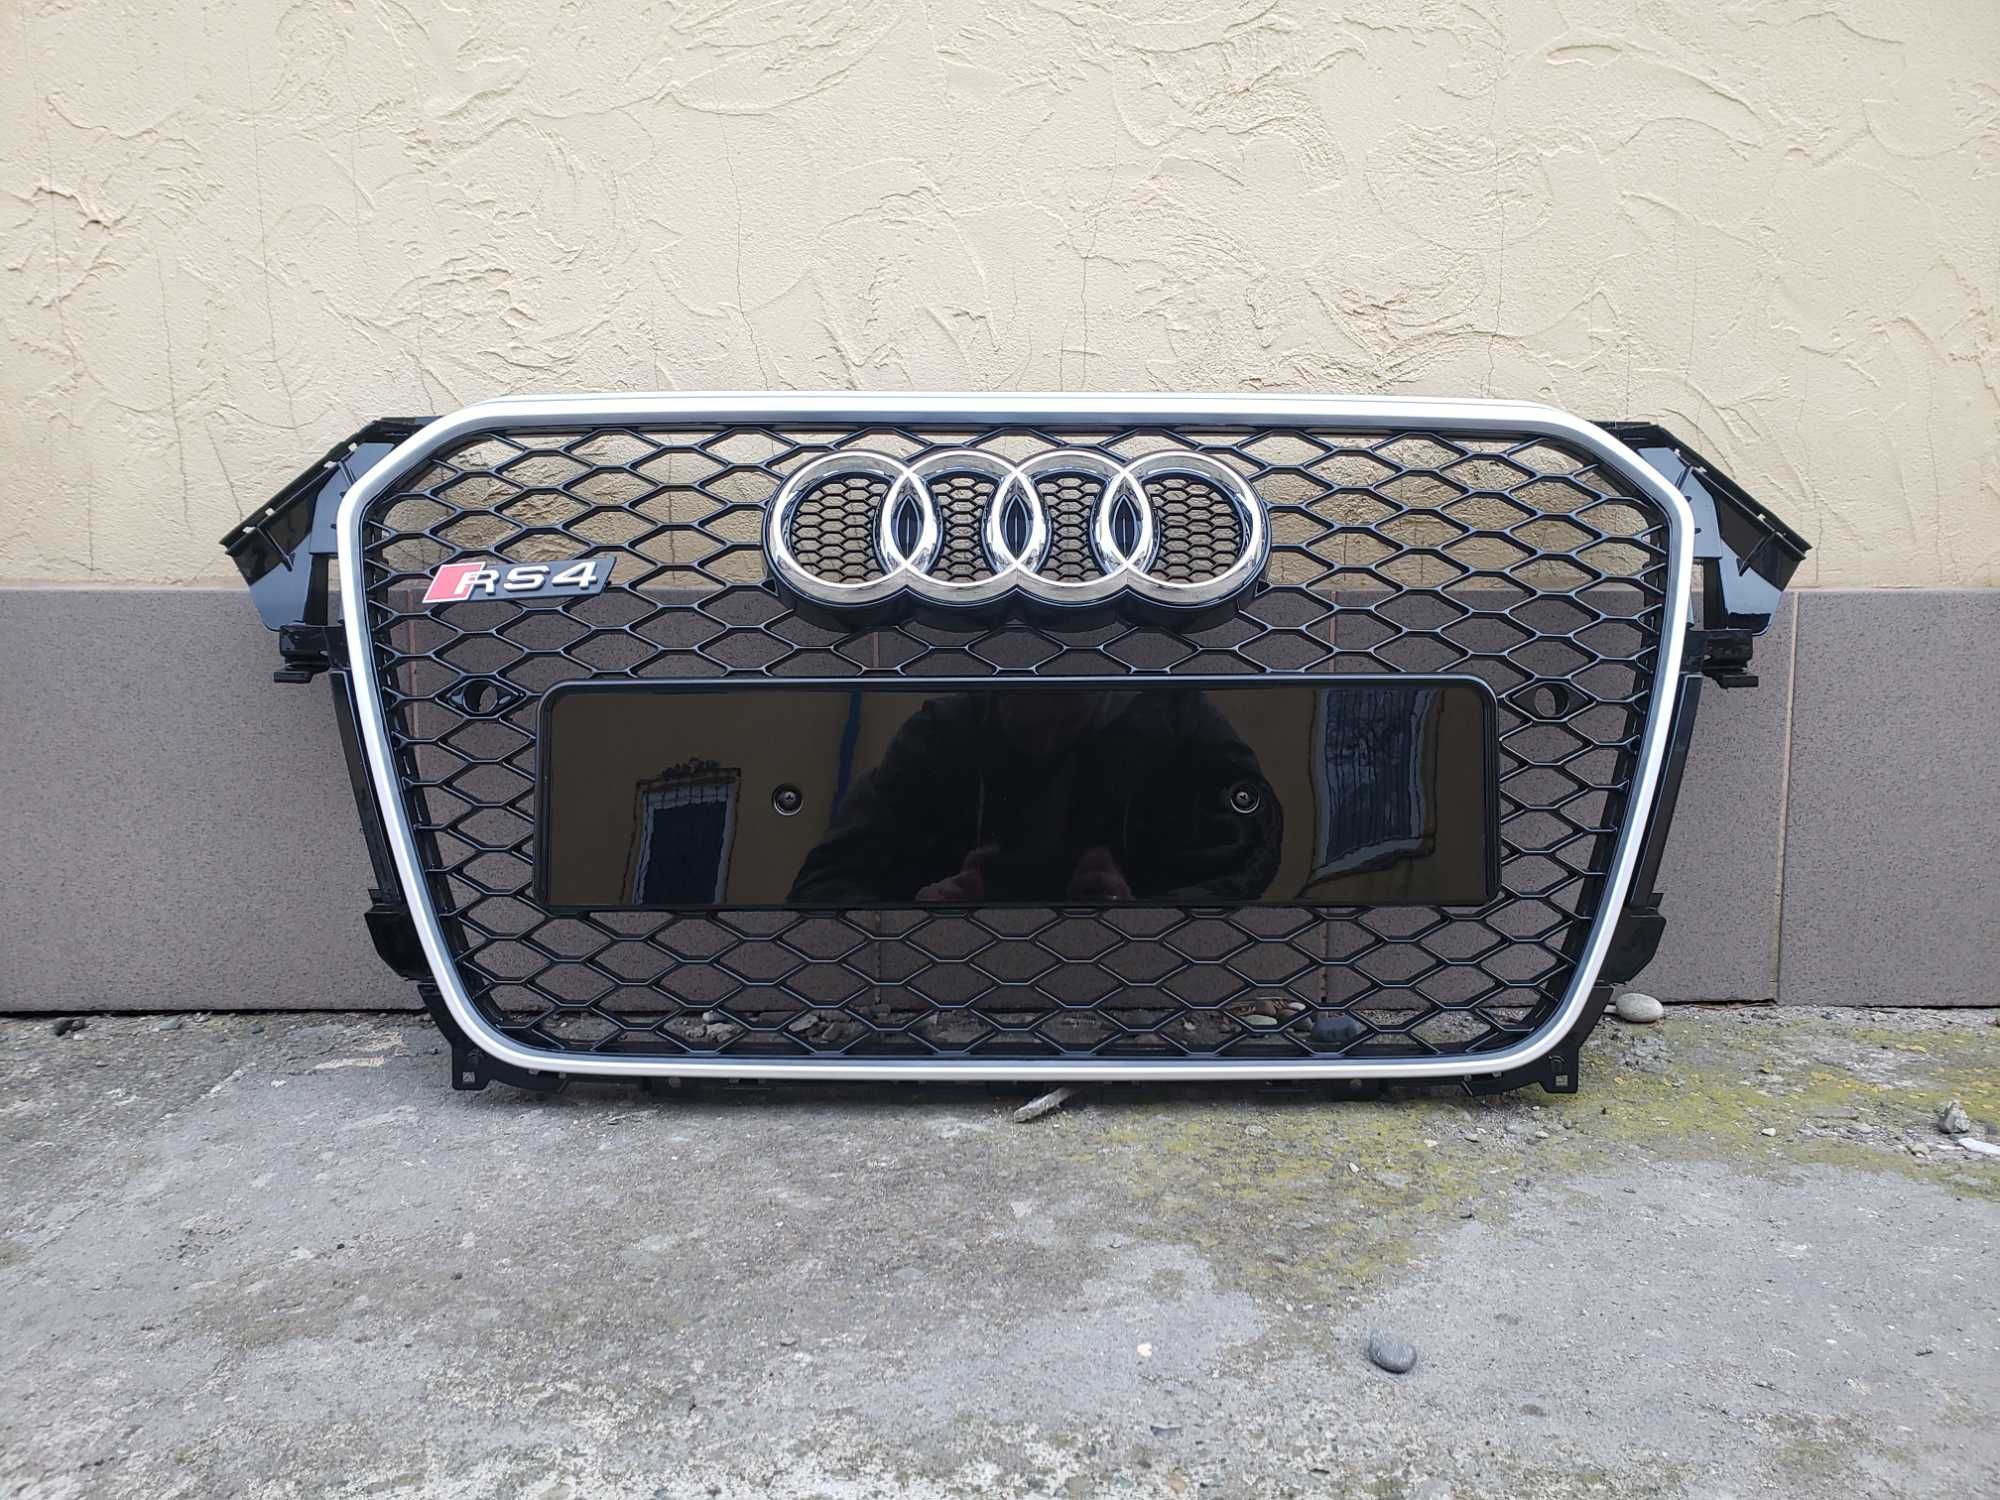 Решетка радиатора на Audi A4 B8 2011-2015 год (стиль RS4 Silver Black)